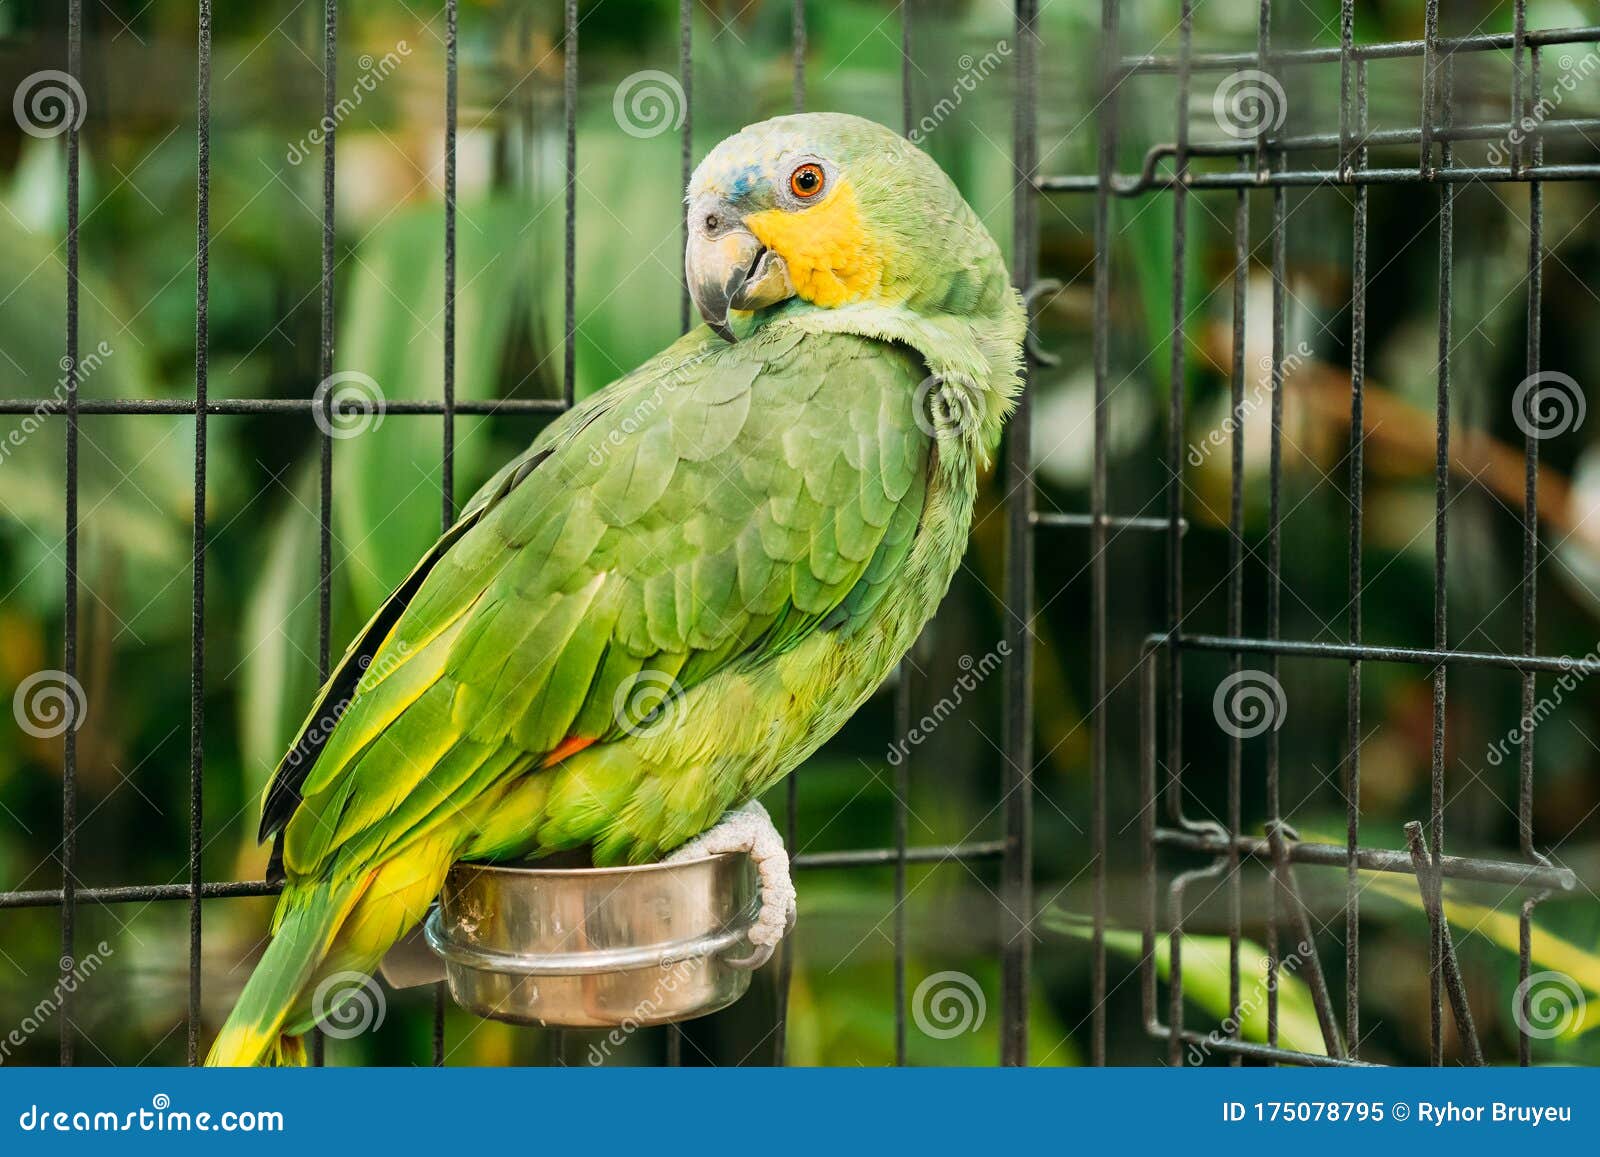 orange-winged amazon or amazona amazonica, also known locally as orange-winged parrot and loro guaro, is a large amazon